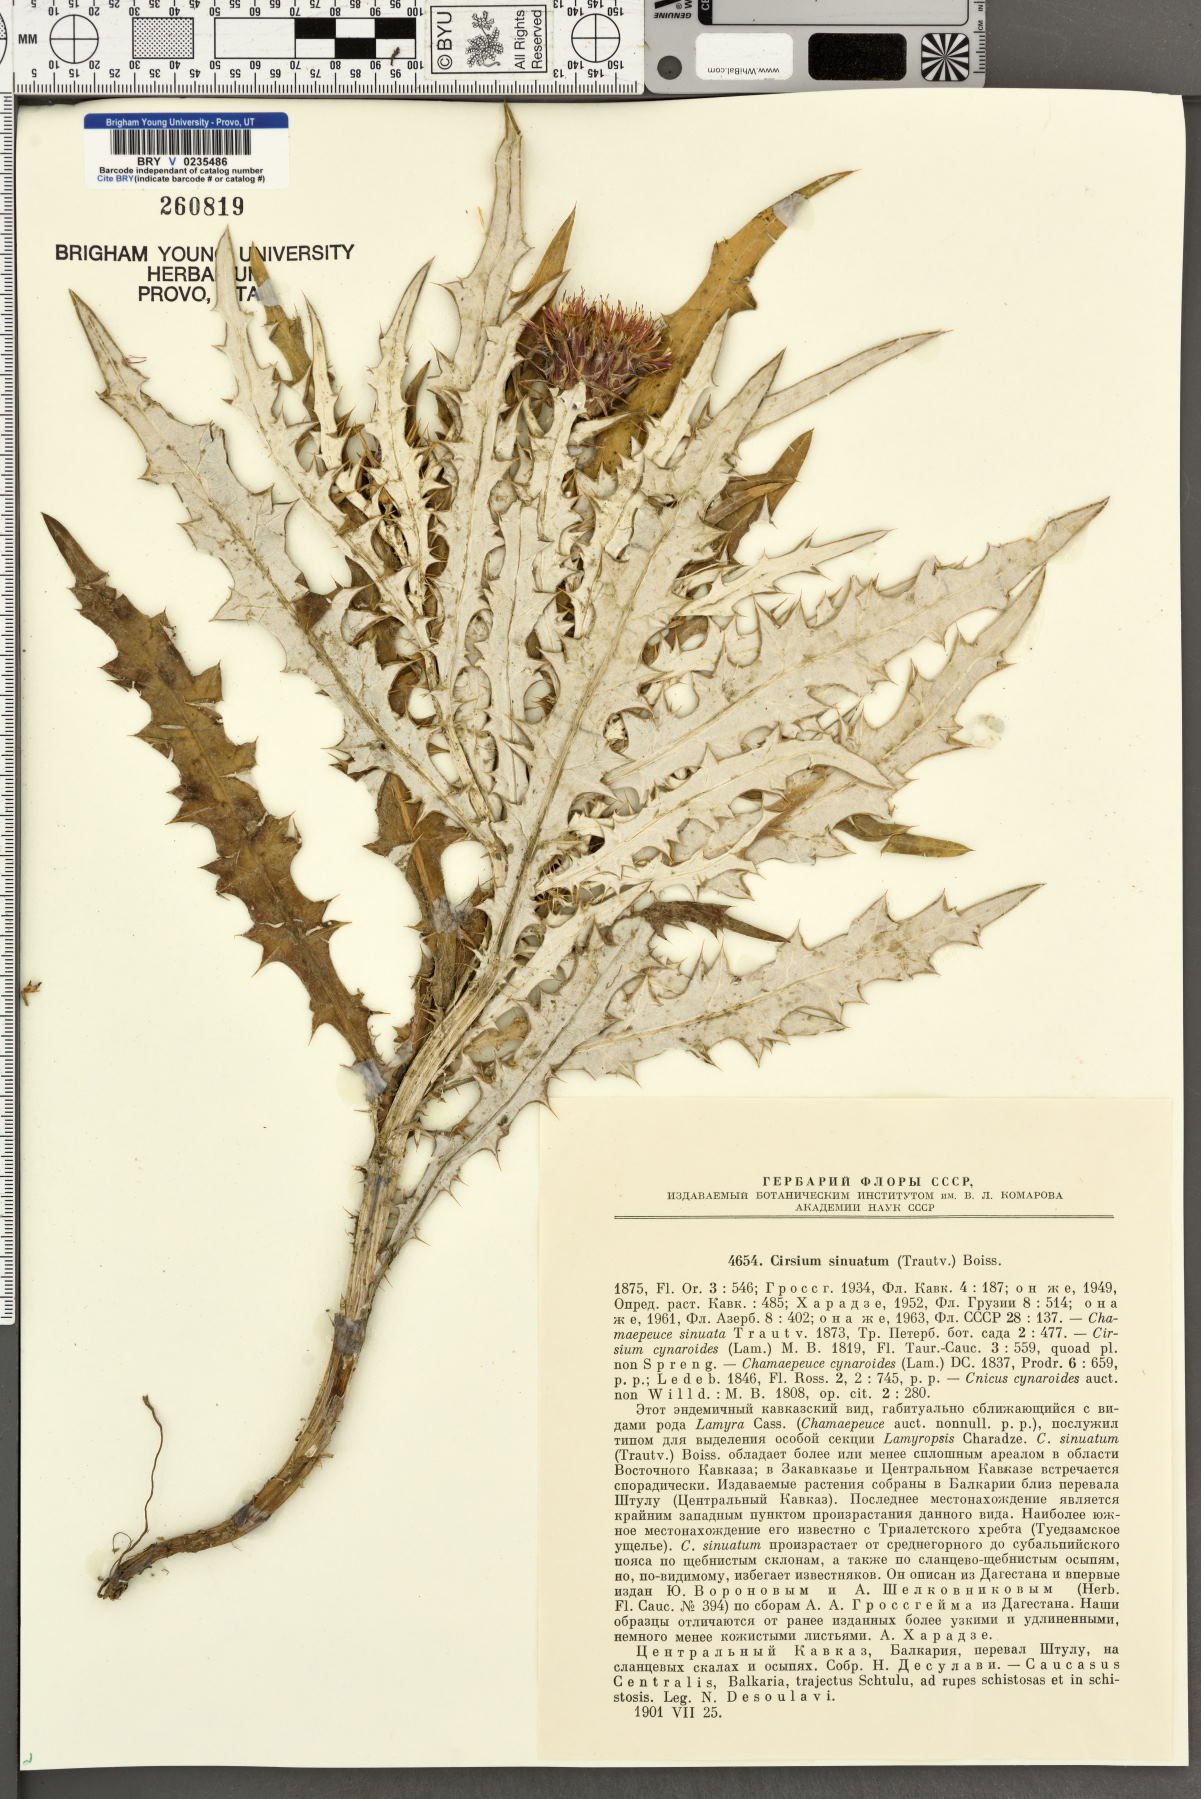 Lamyropsis image